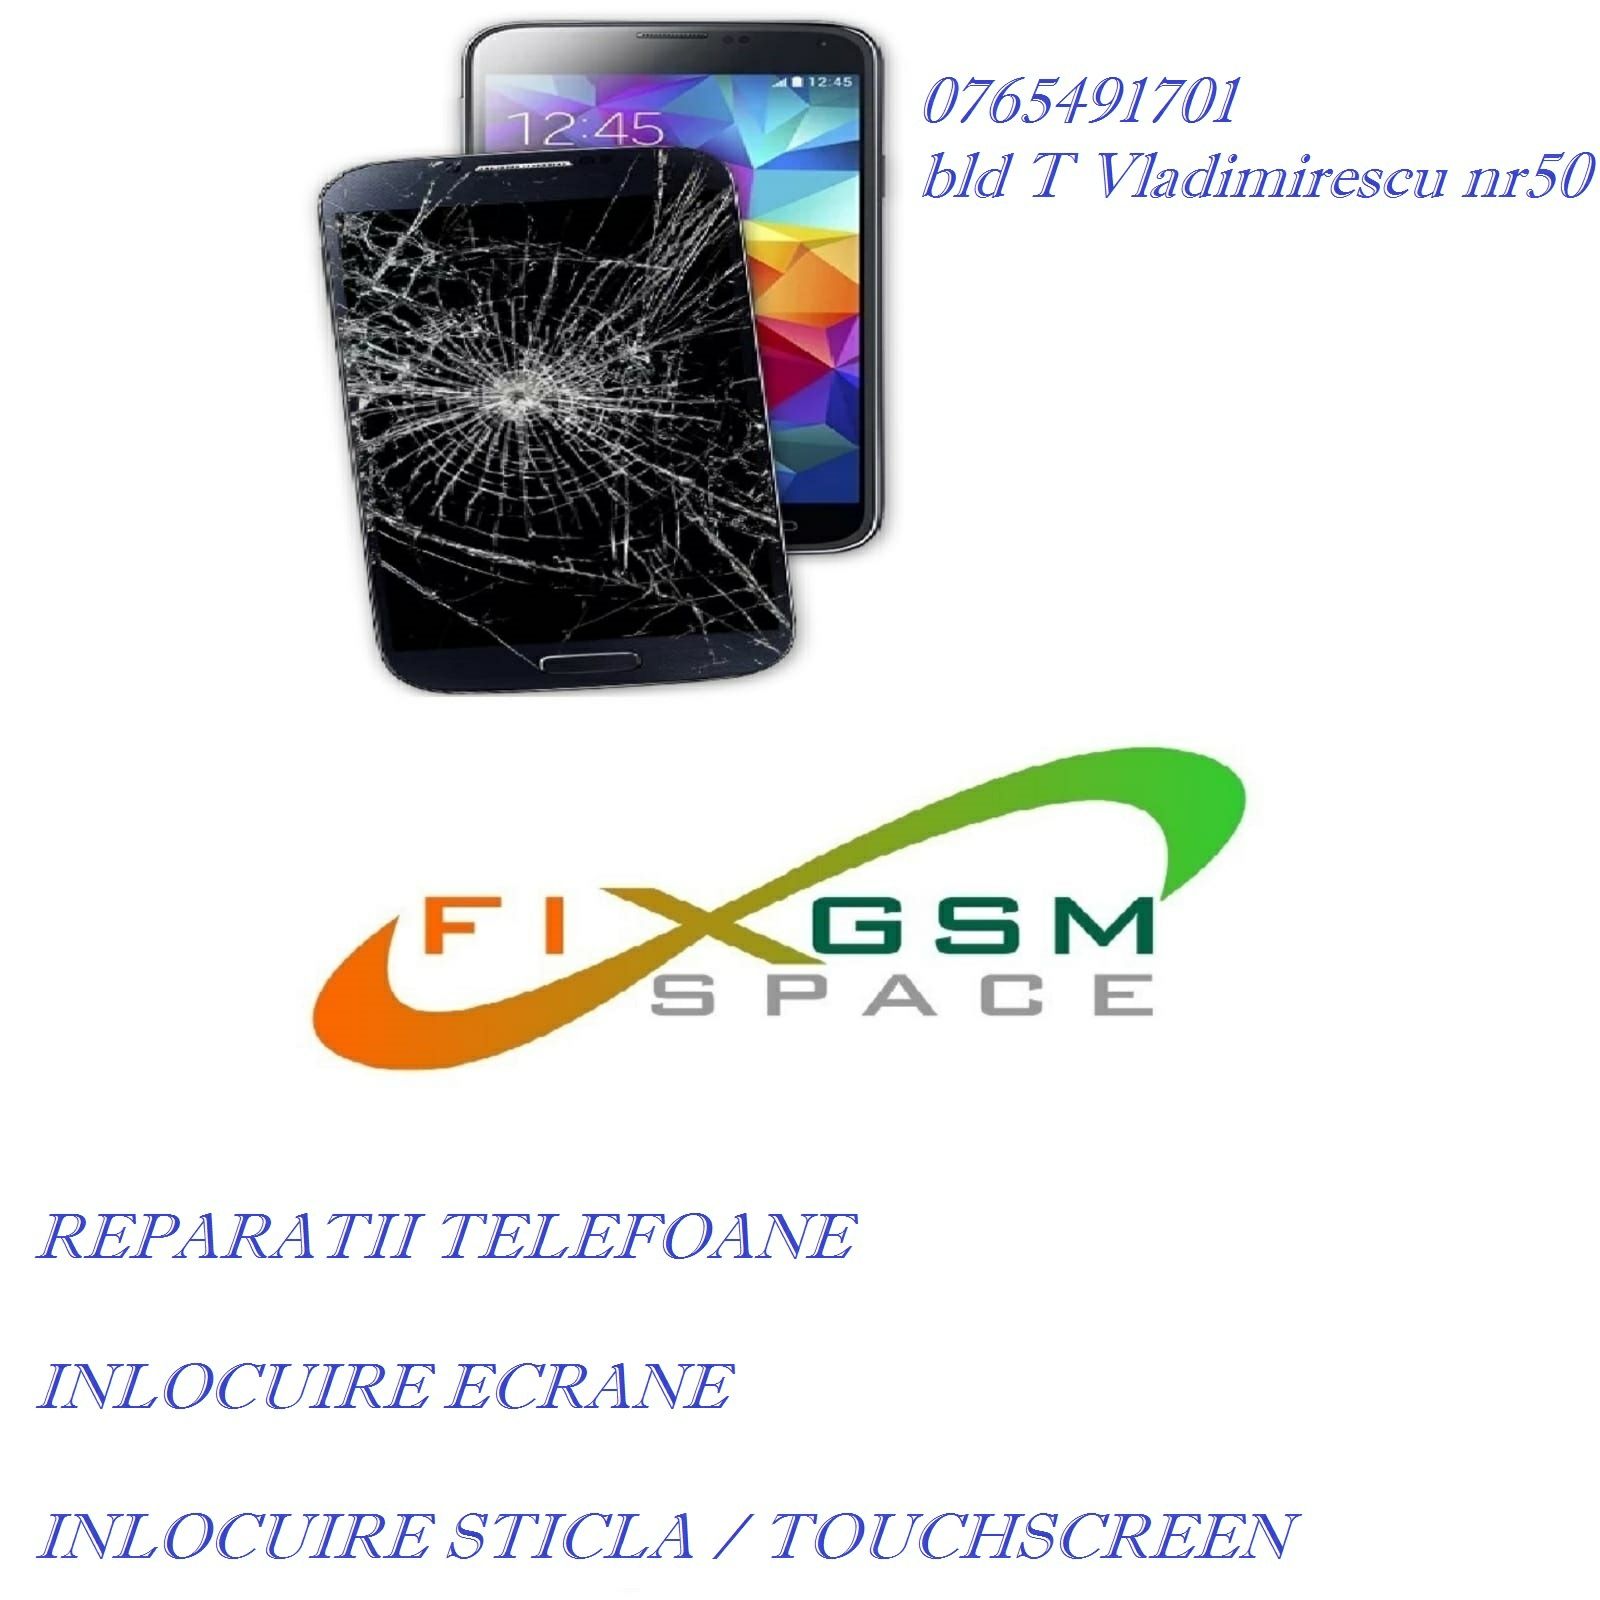 Reparatii telefoane Service gsm